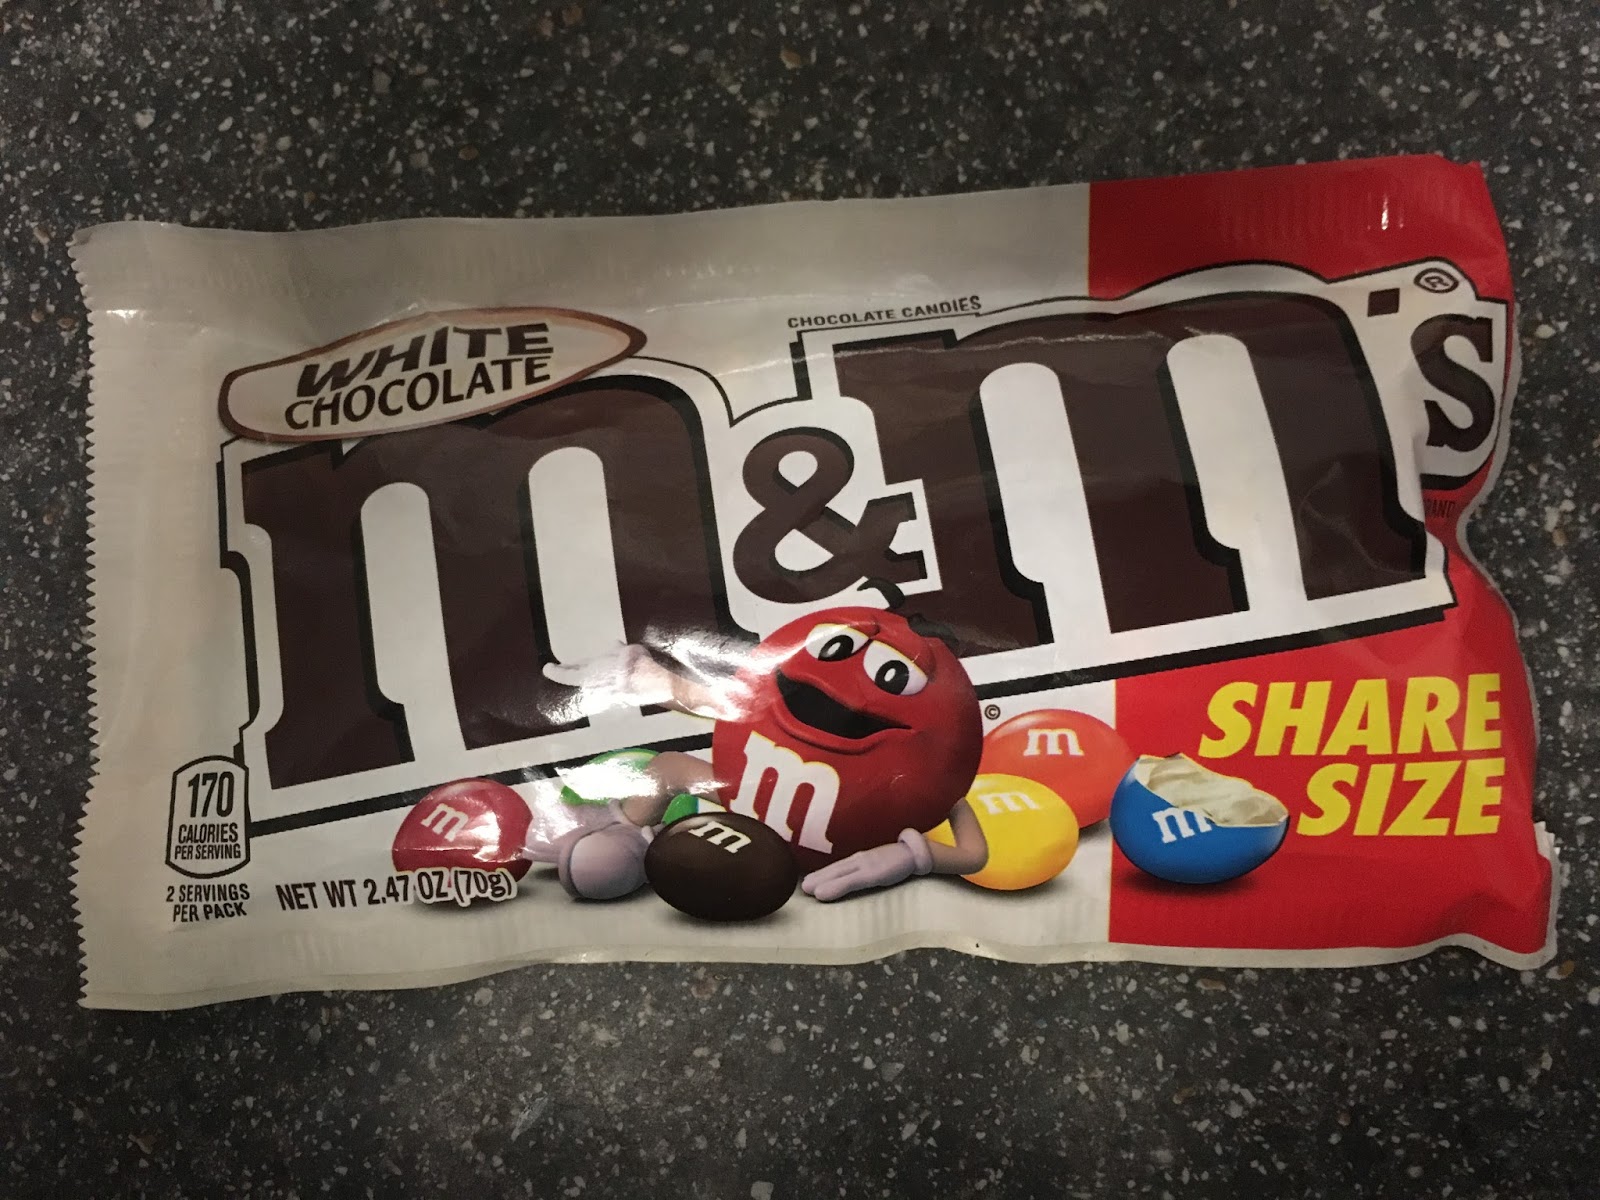 M&M's - White Chocolate - Share Size